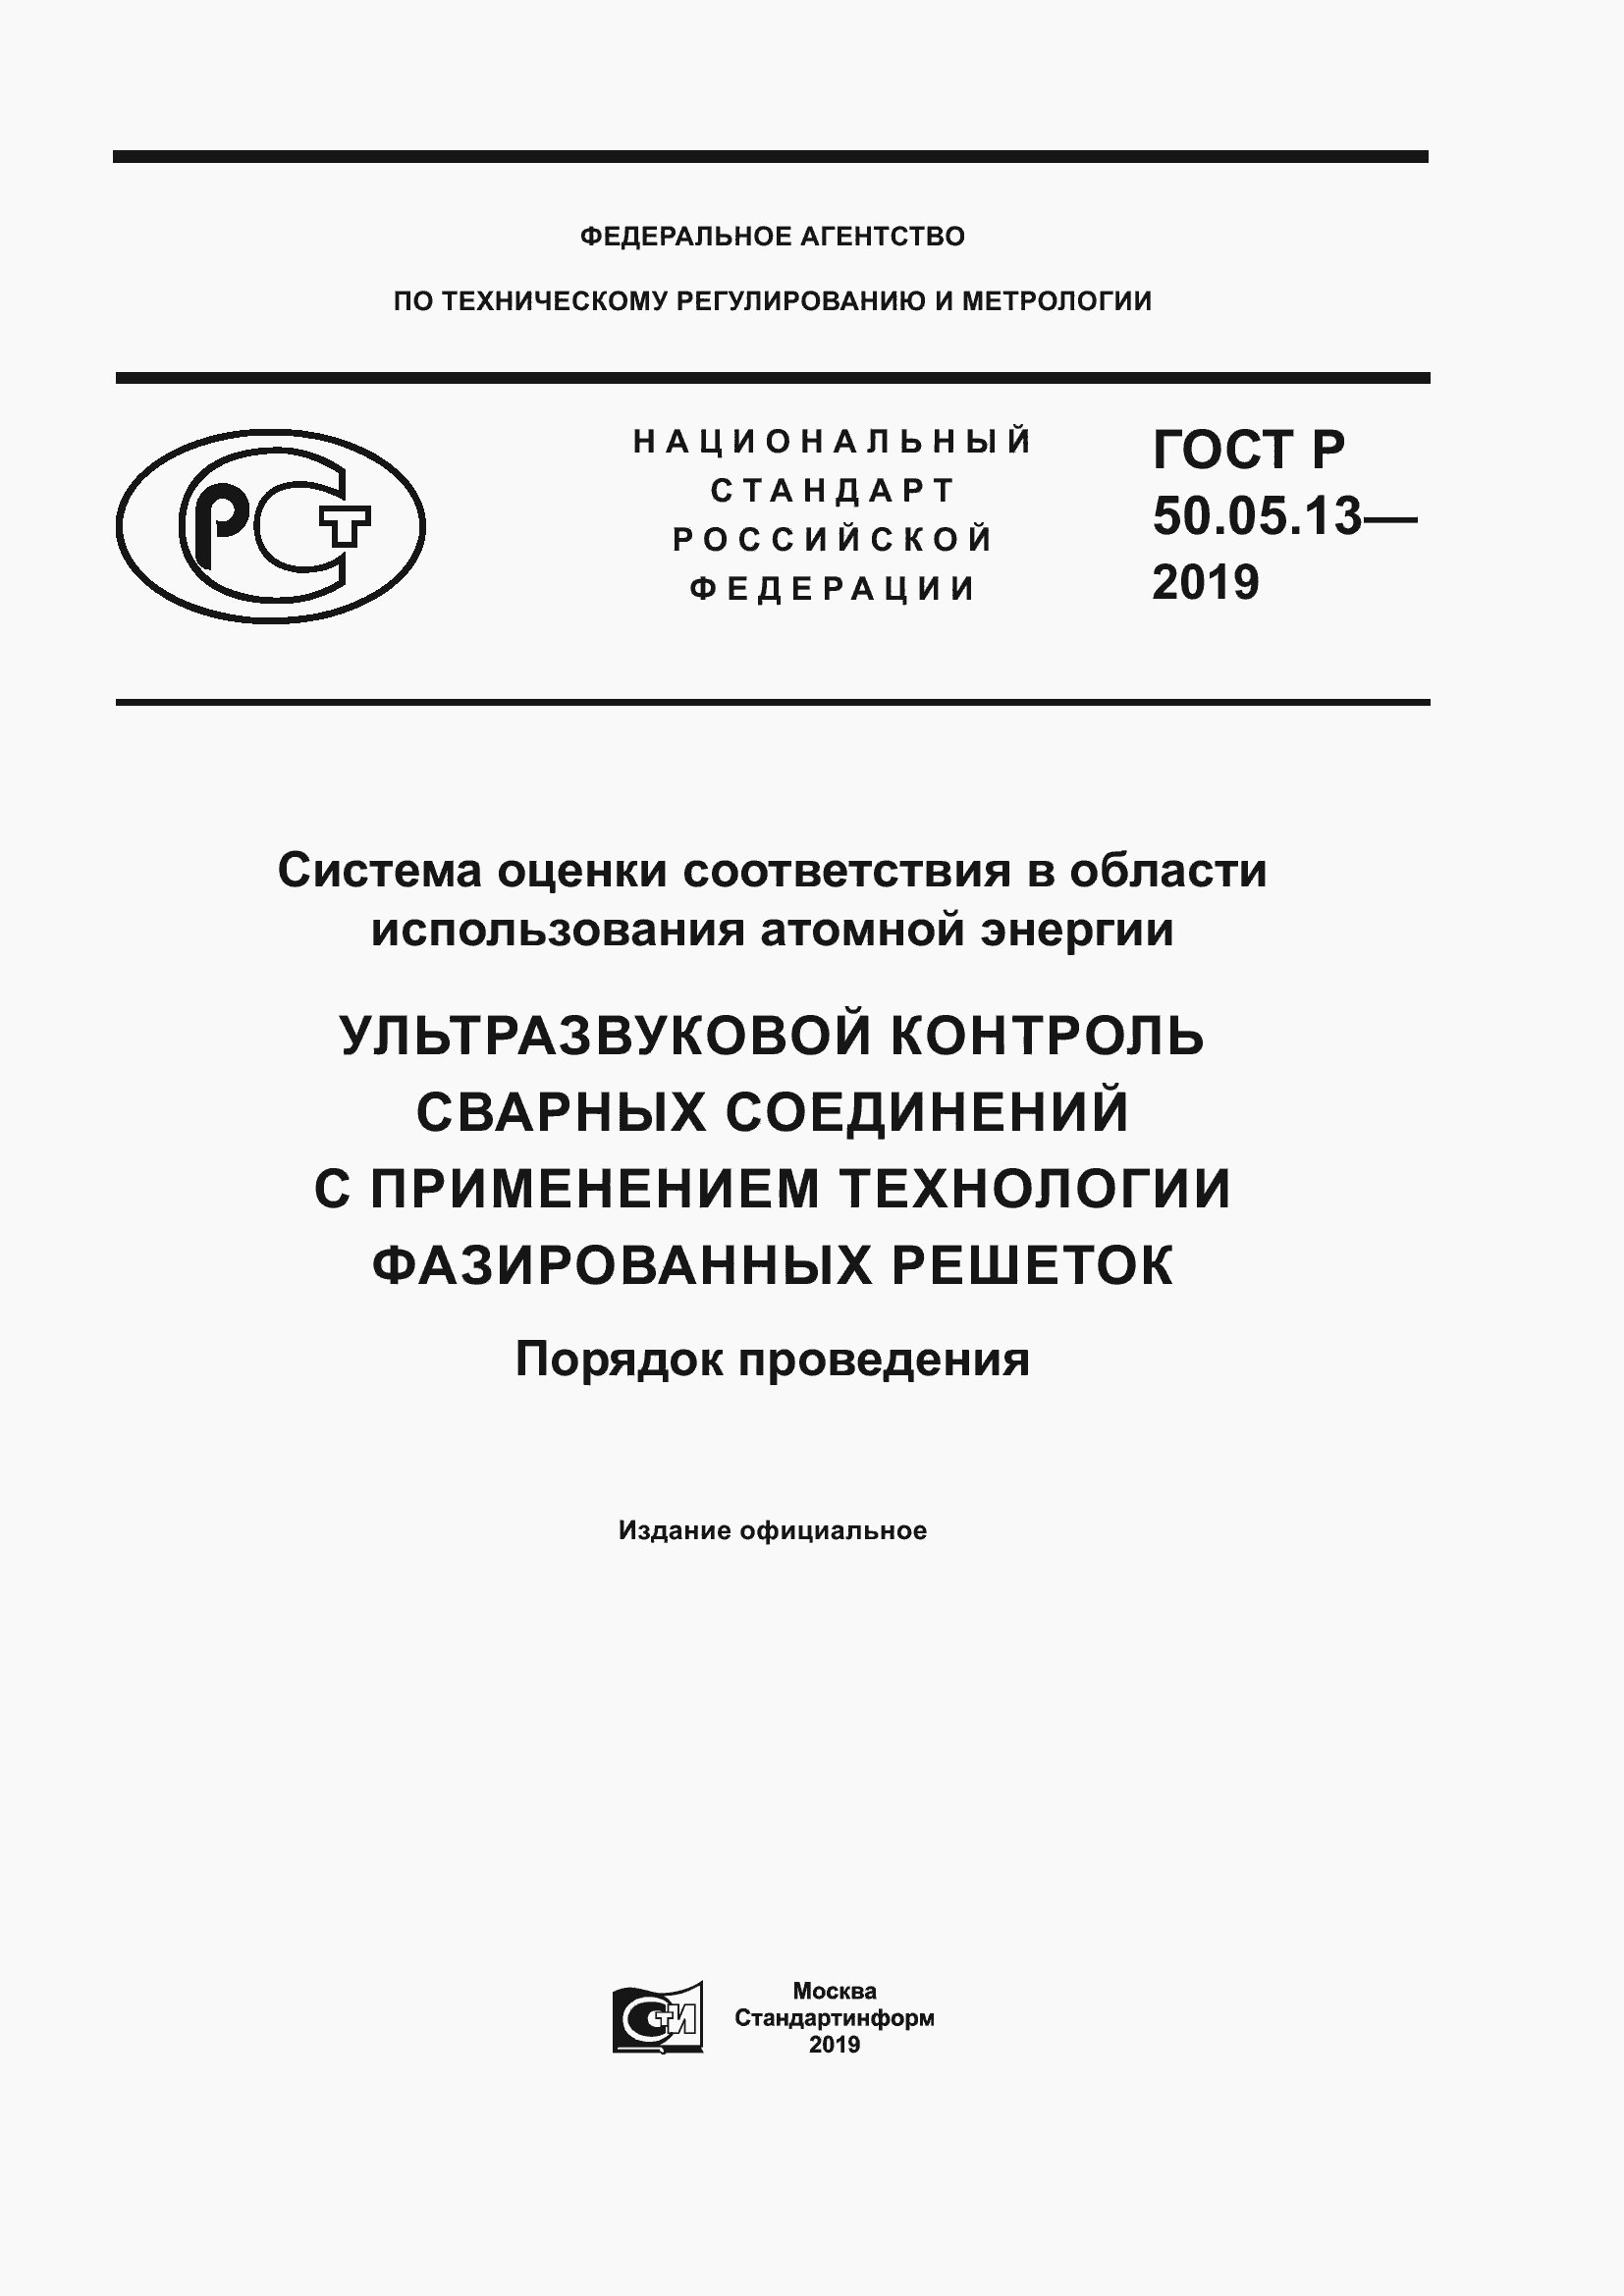 ГОСТ Р 50.05.13-2019. Страница 1